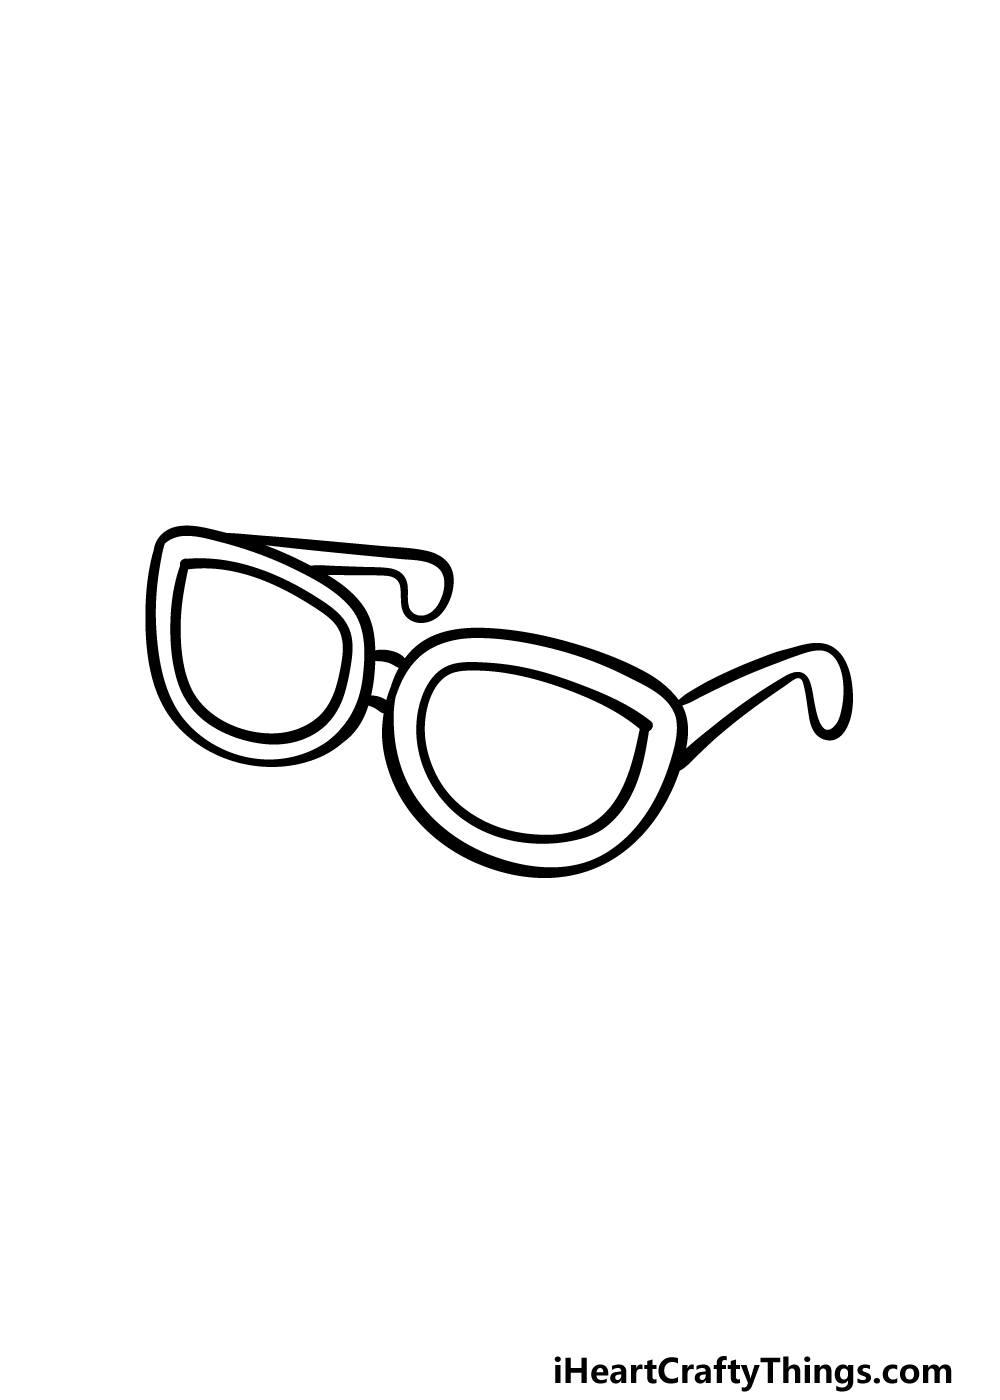 Cartoon Sunglasses Drawing - How To Draw Cartoon Sunglasses Step By Step